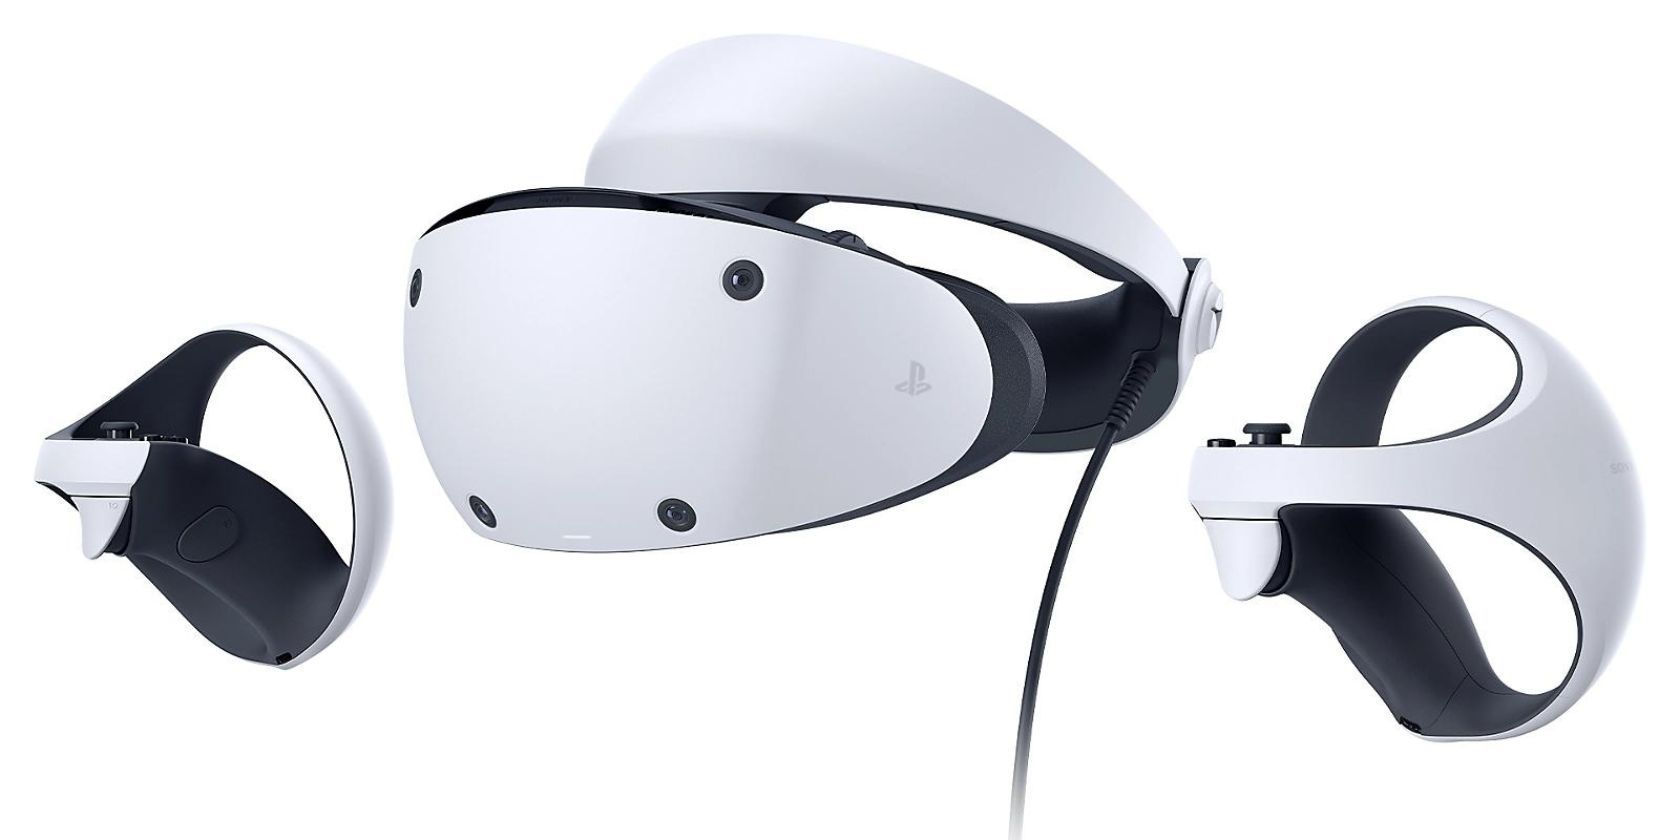 PS VR2 design revealed